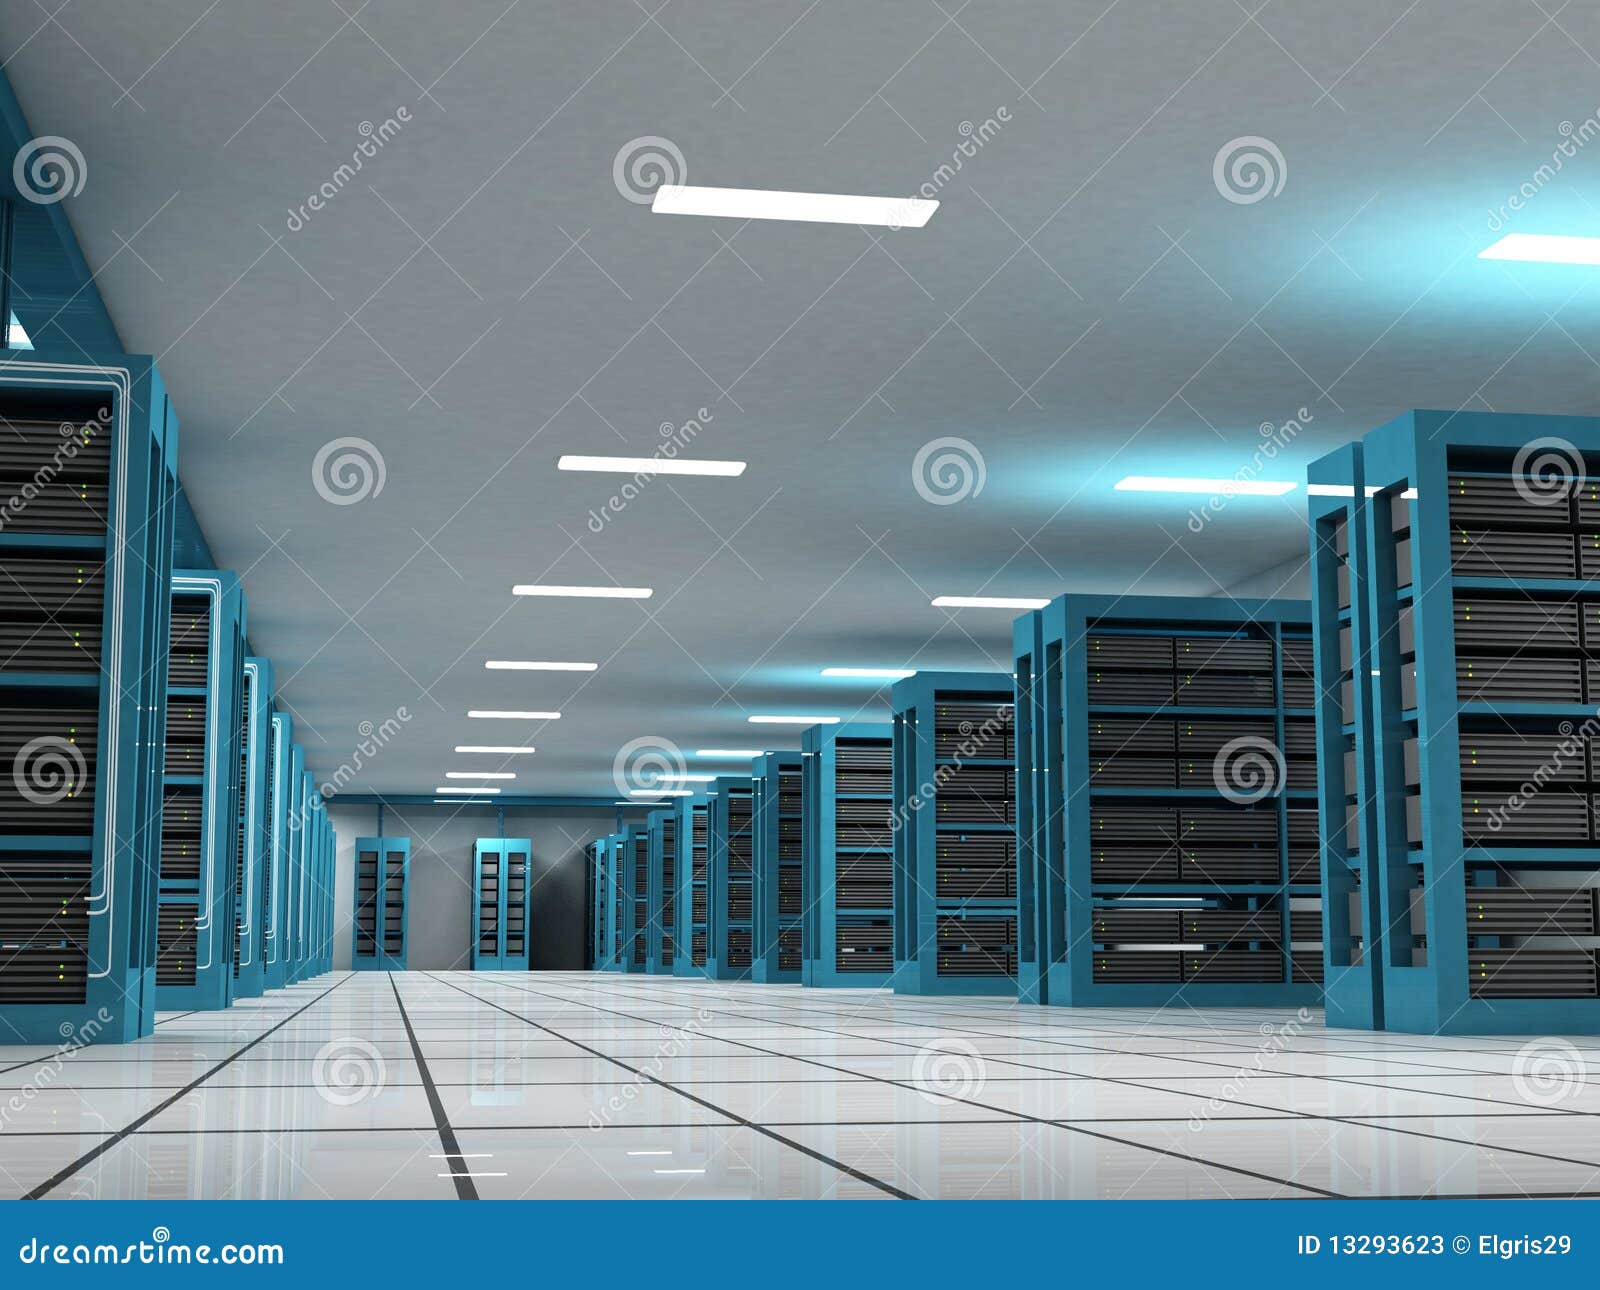 hosting and server room